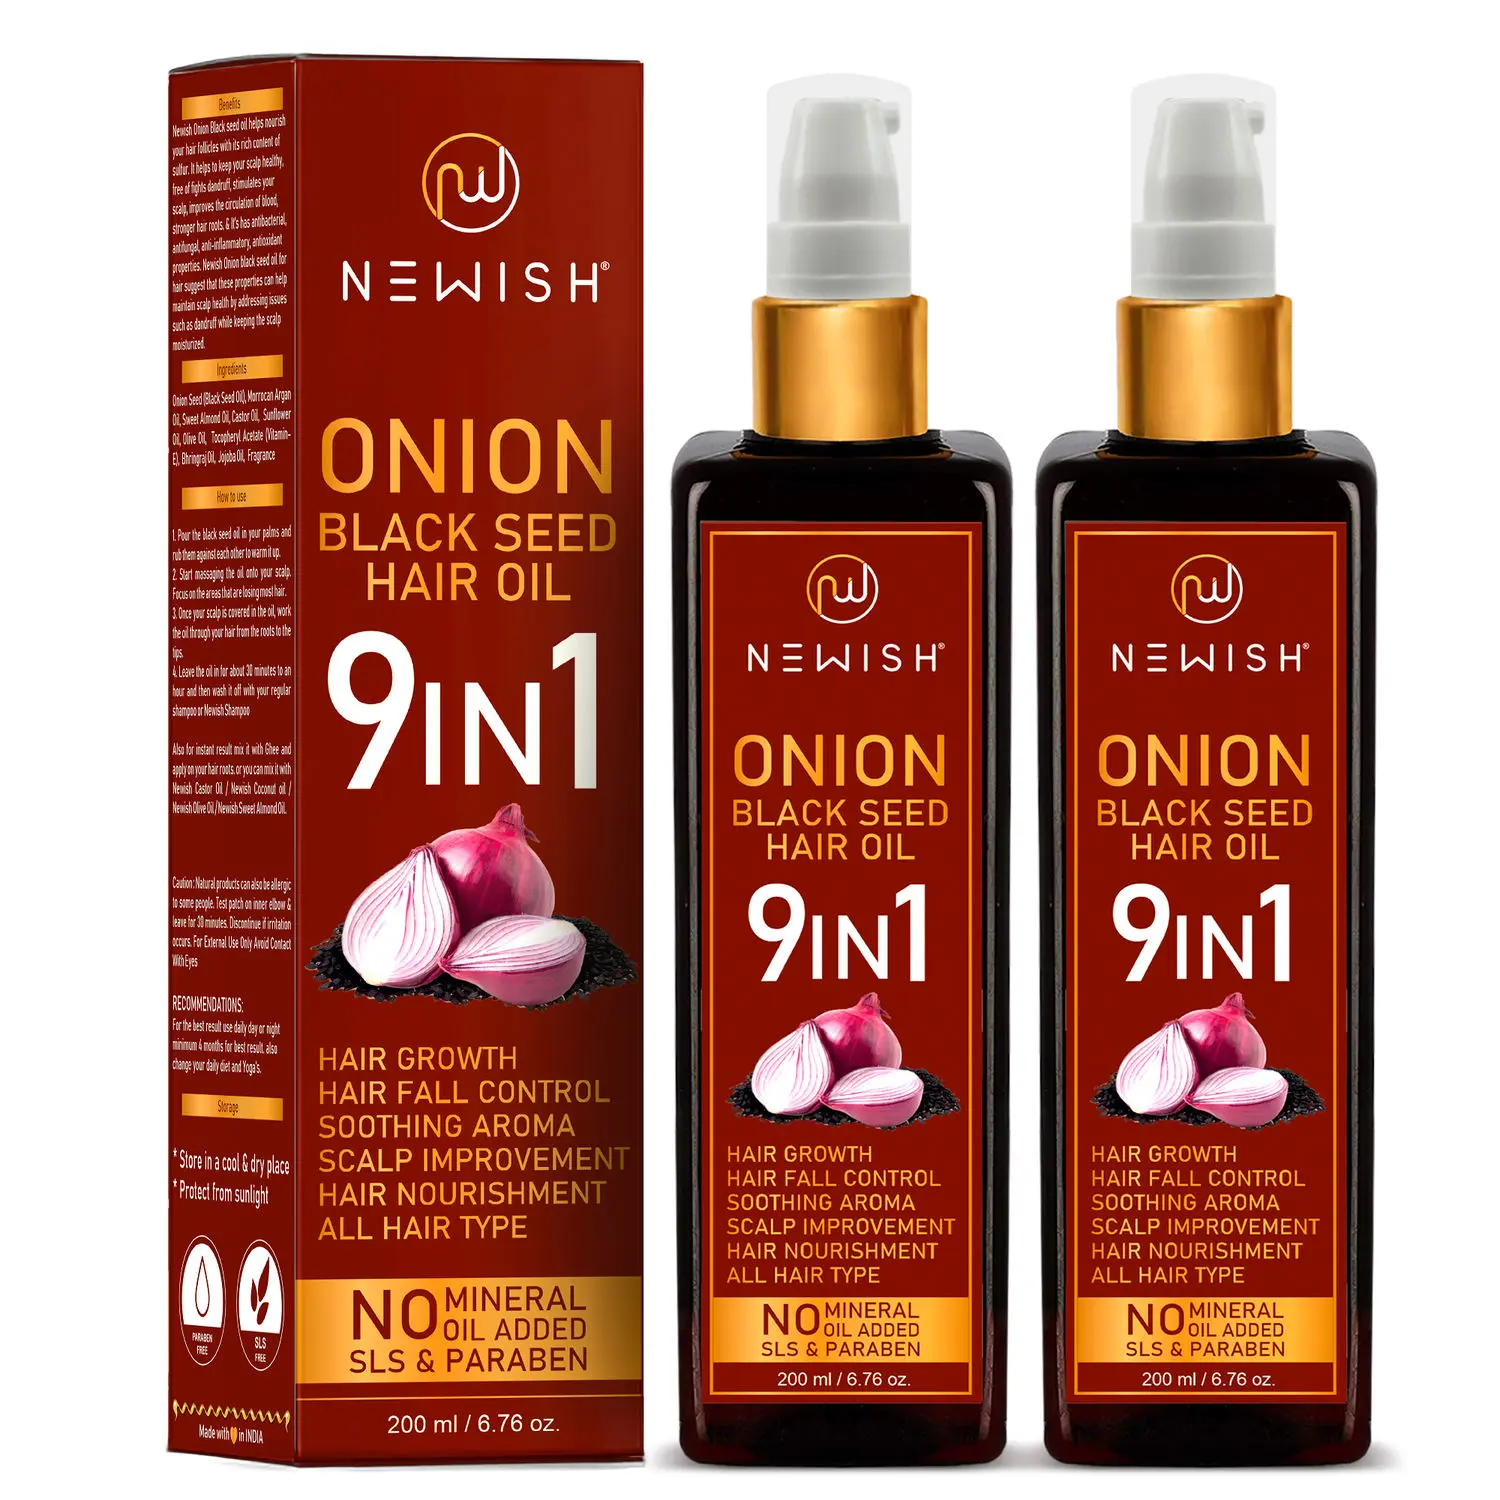 Newish Onion Black seed hair oil 9 in 1 Pack of 2 ( 200 ml each)